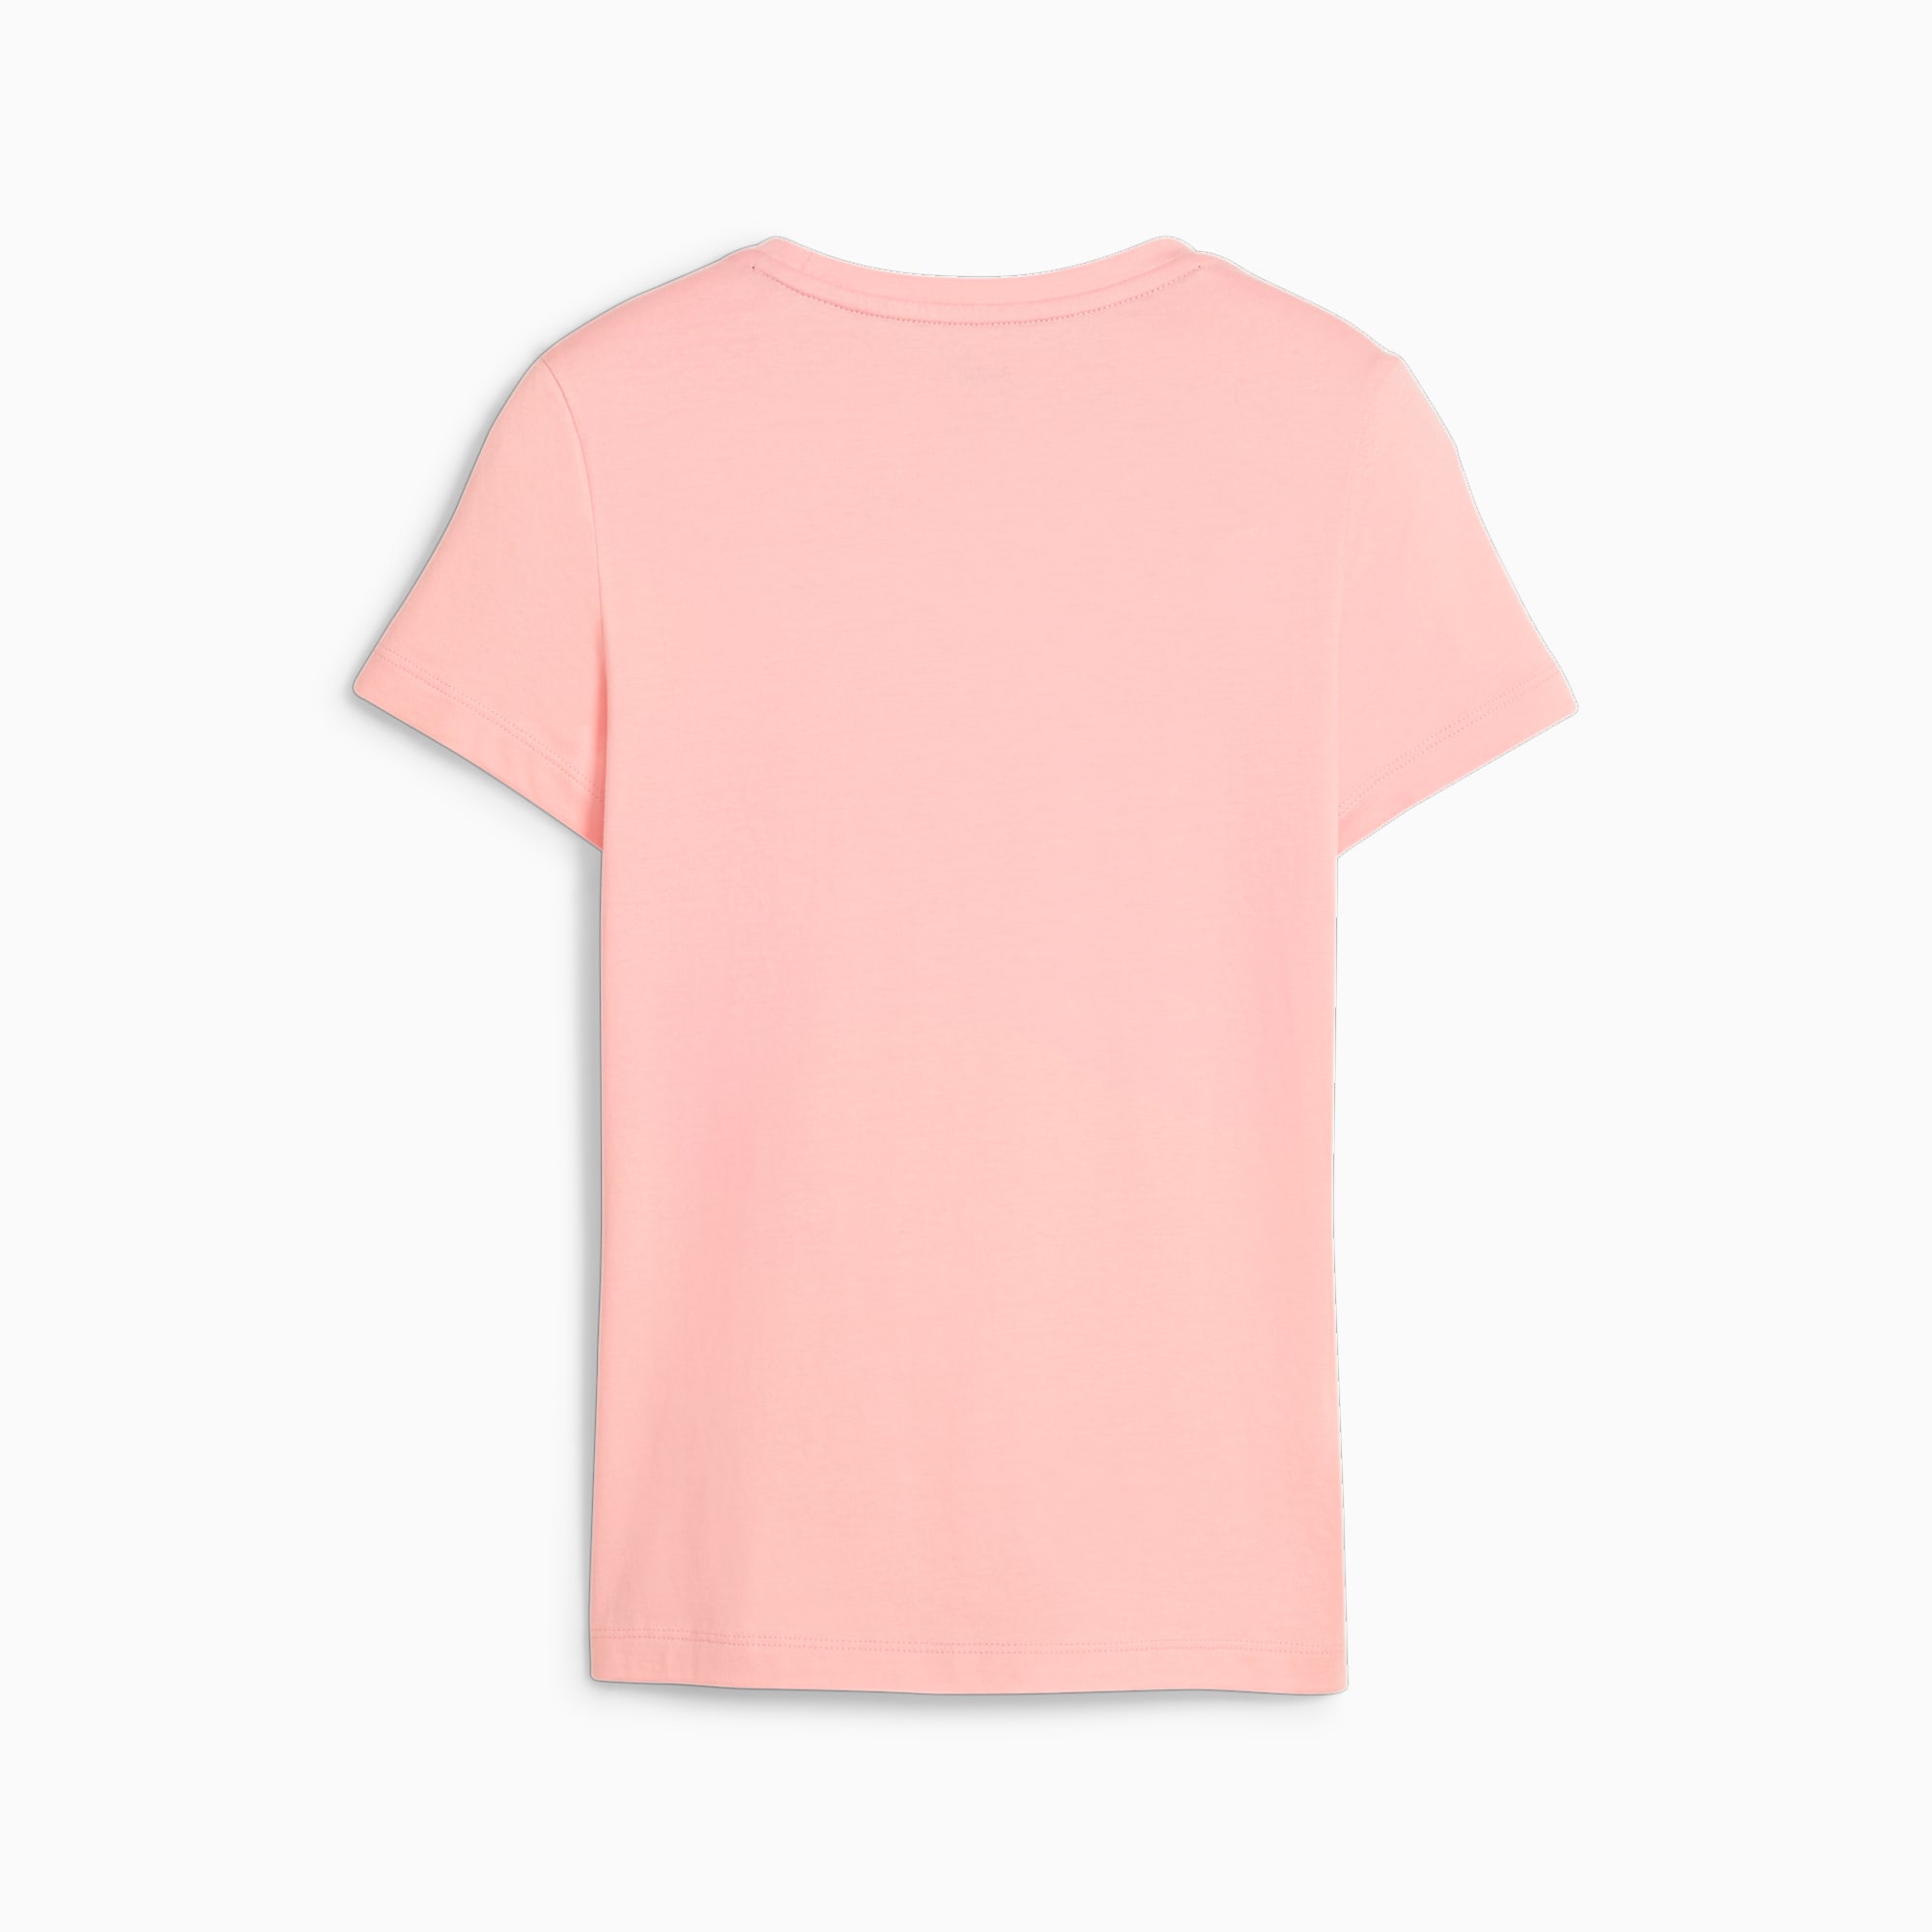 PUMA Essentials Logo Youth T-Shirt, Peach Smoothie, Size 140, Clothing